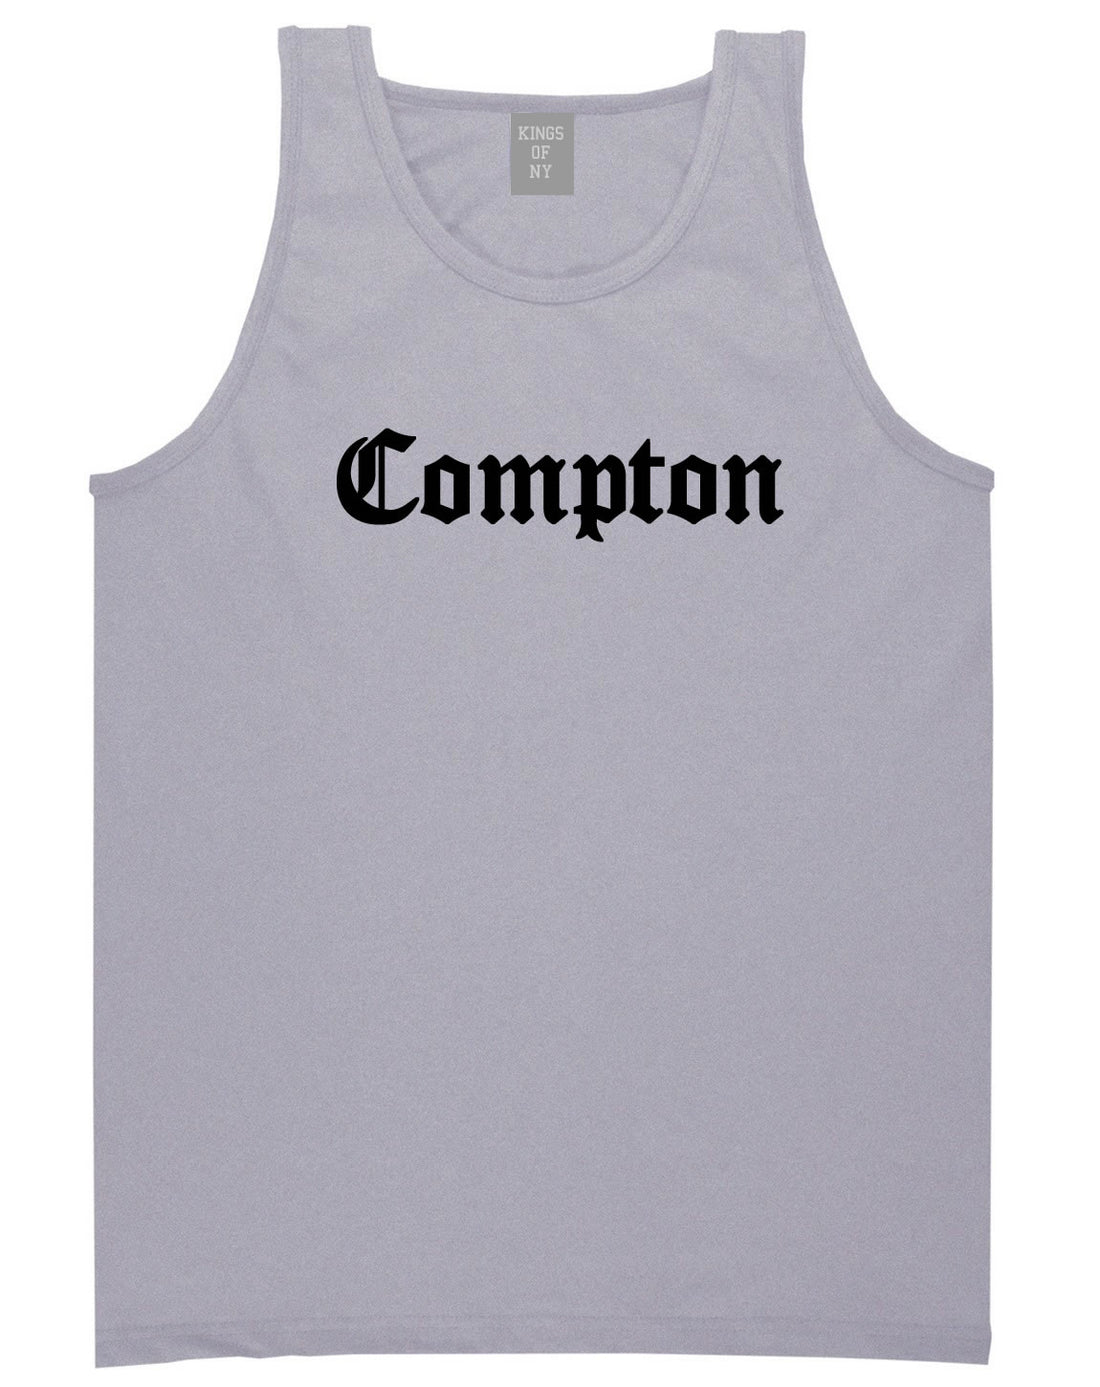 Kings Of NY Compton Tank Top in Grey